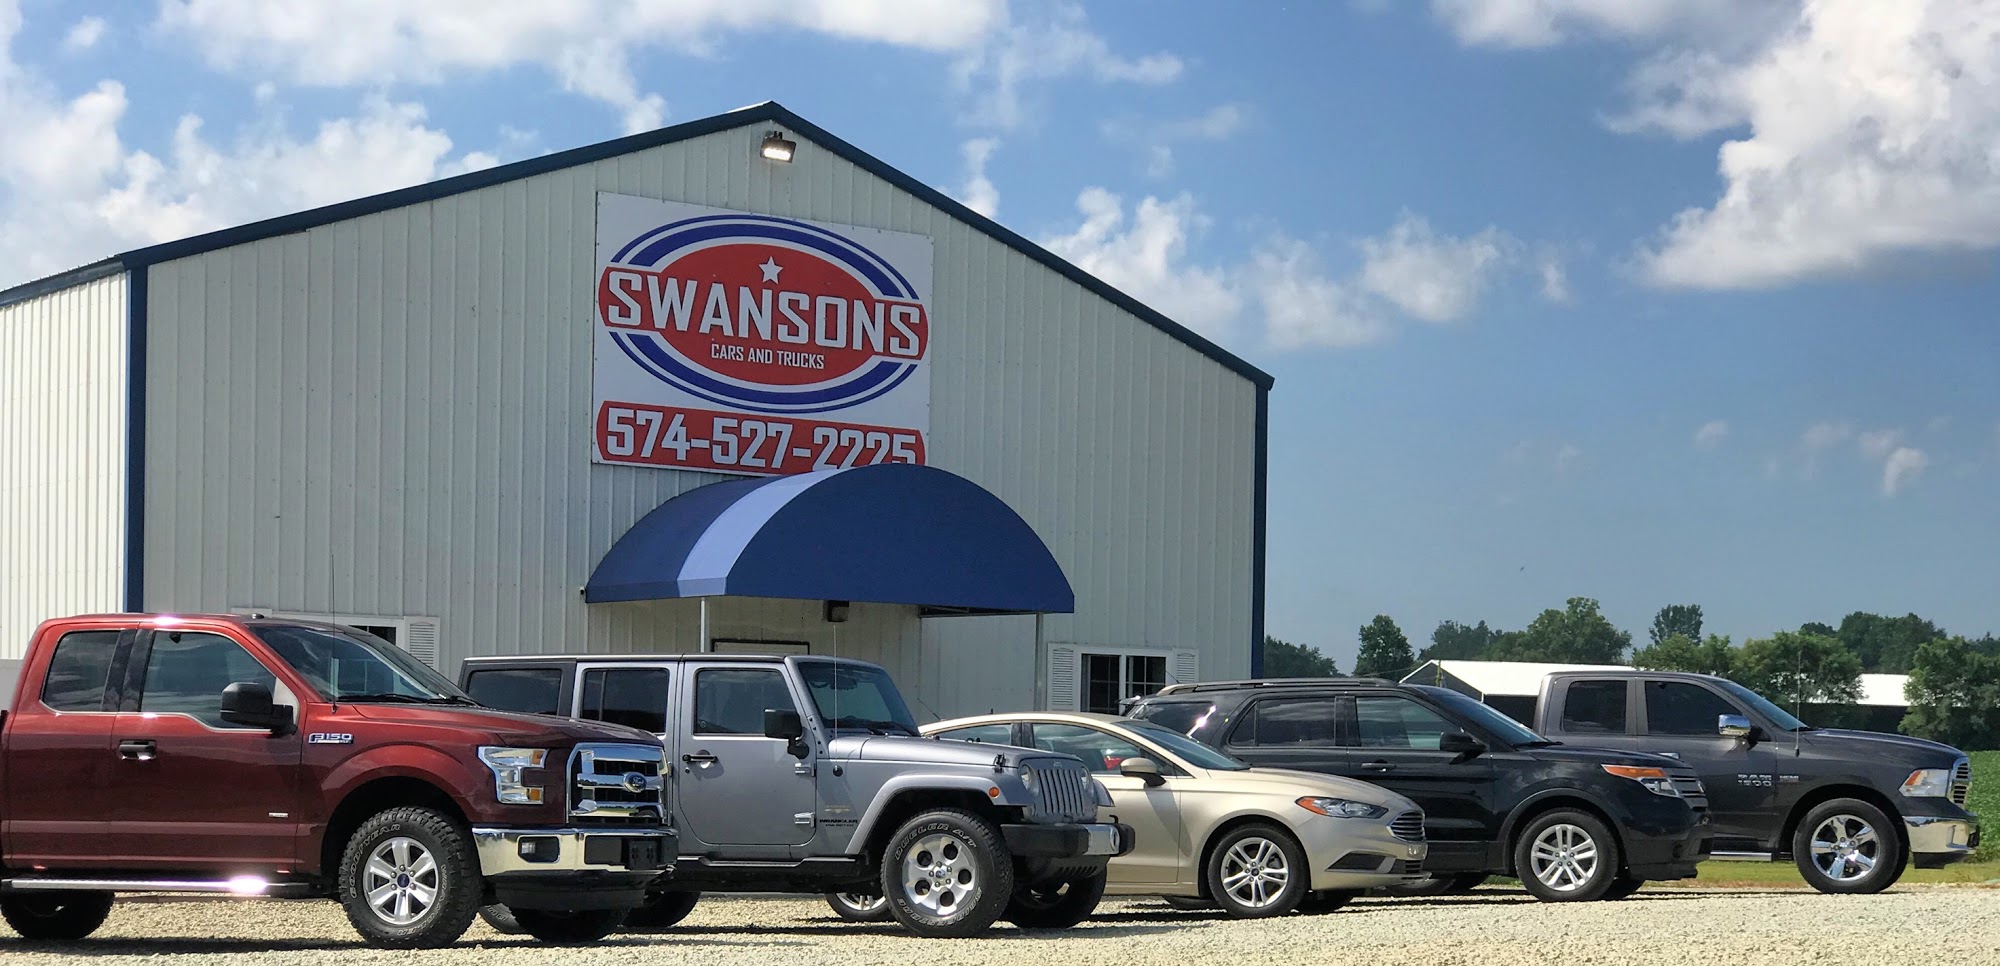 Swanson's Cars & Trucks